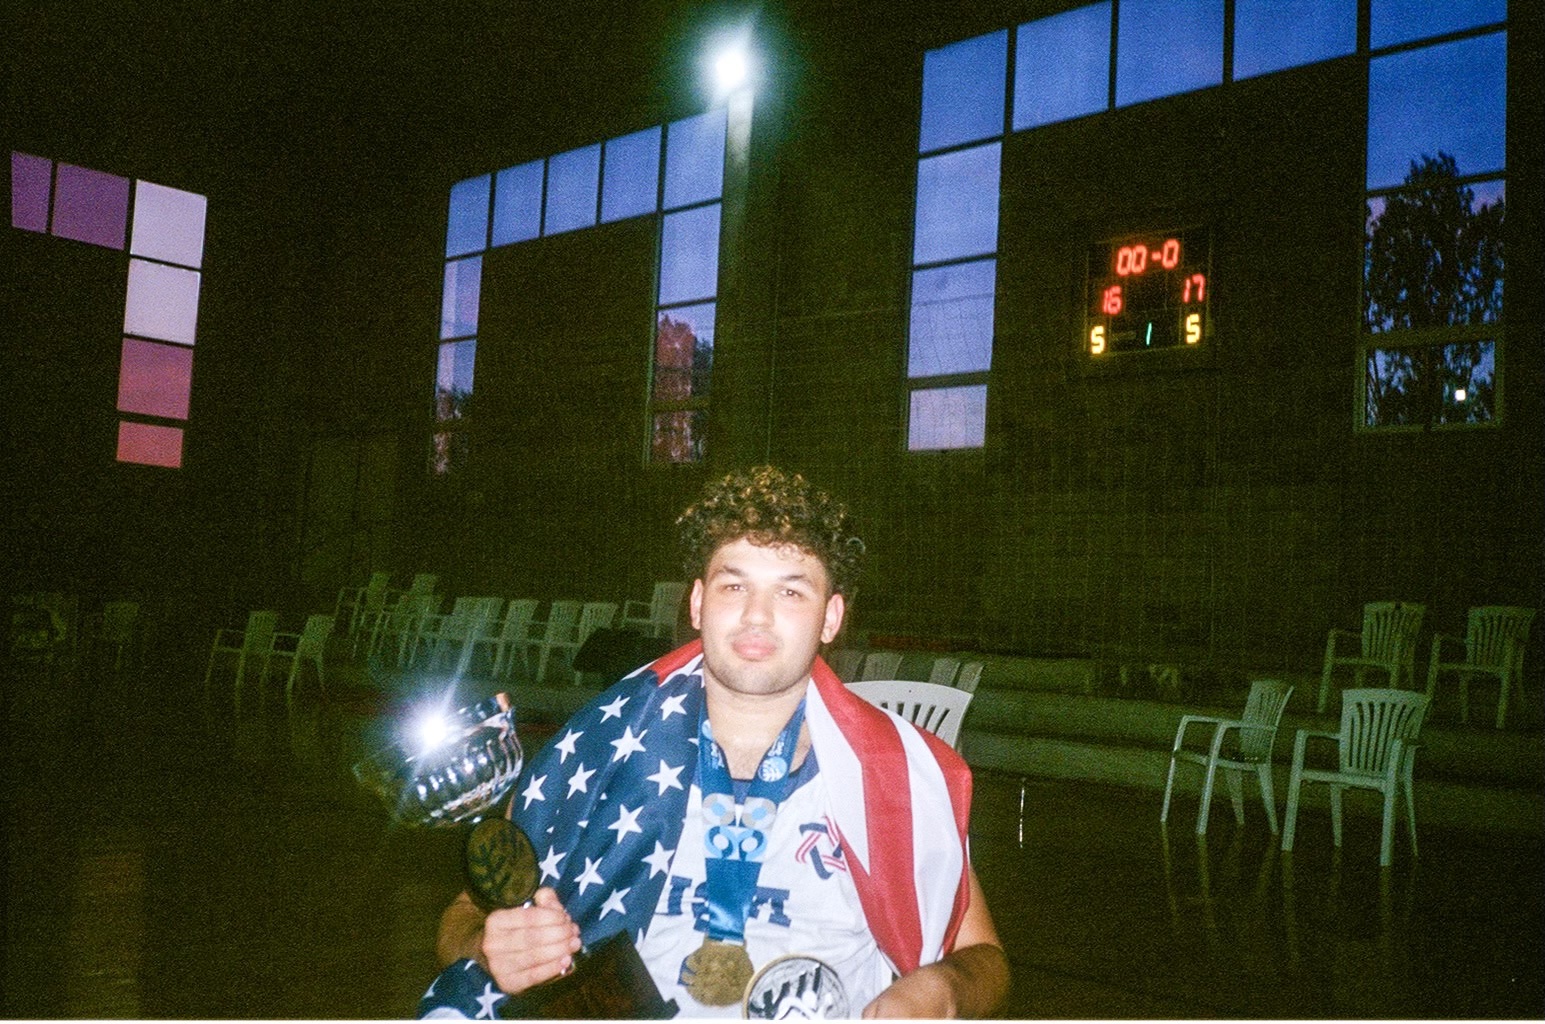 Josh Steinberg proudly represents USA as he celebrates his win.